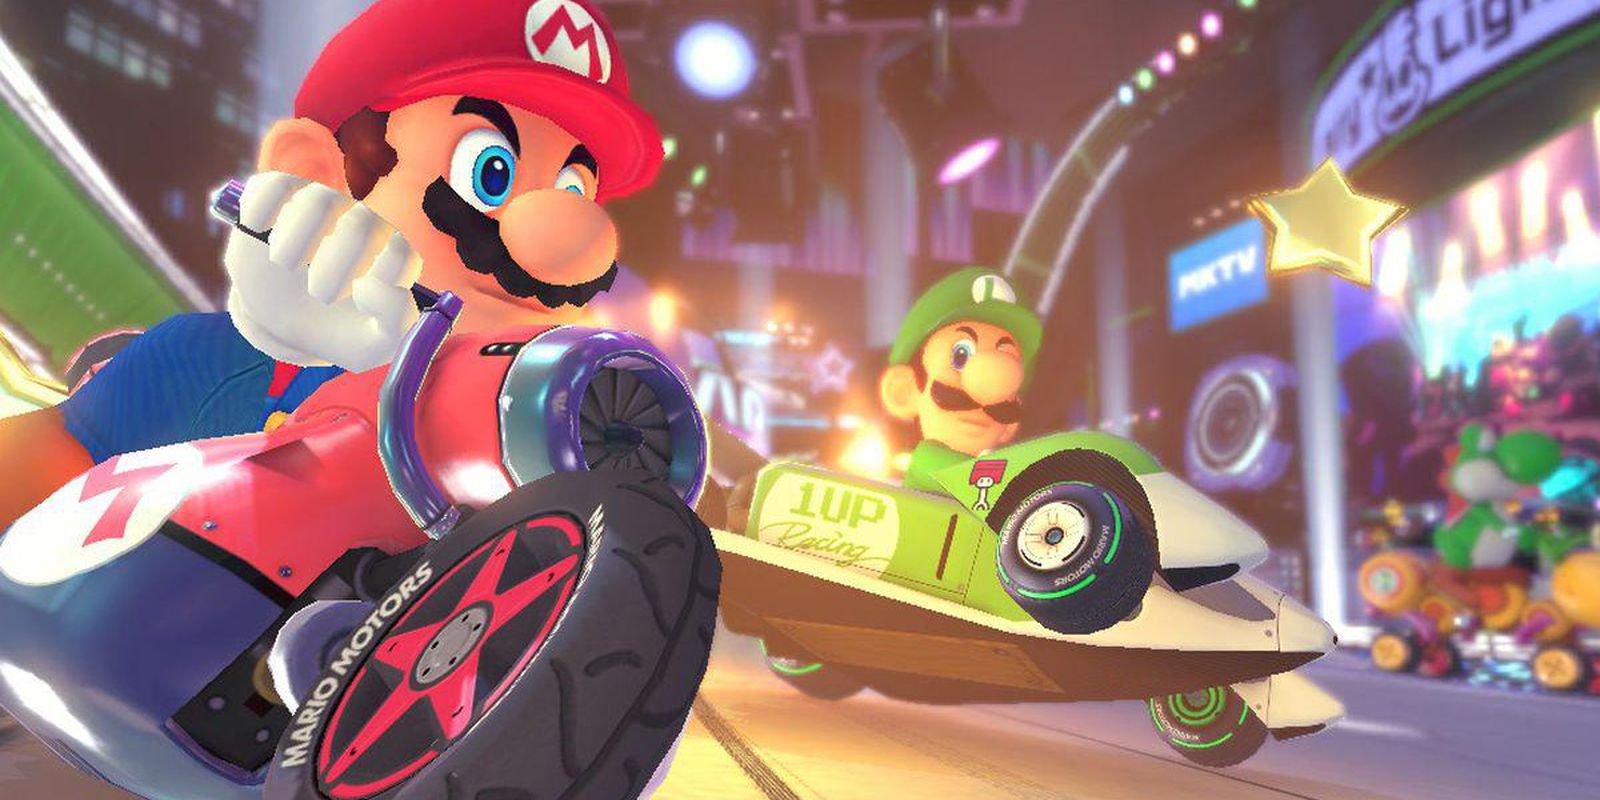 Mario and Luigi in Mario Kart